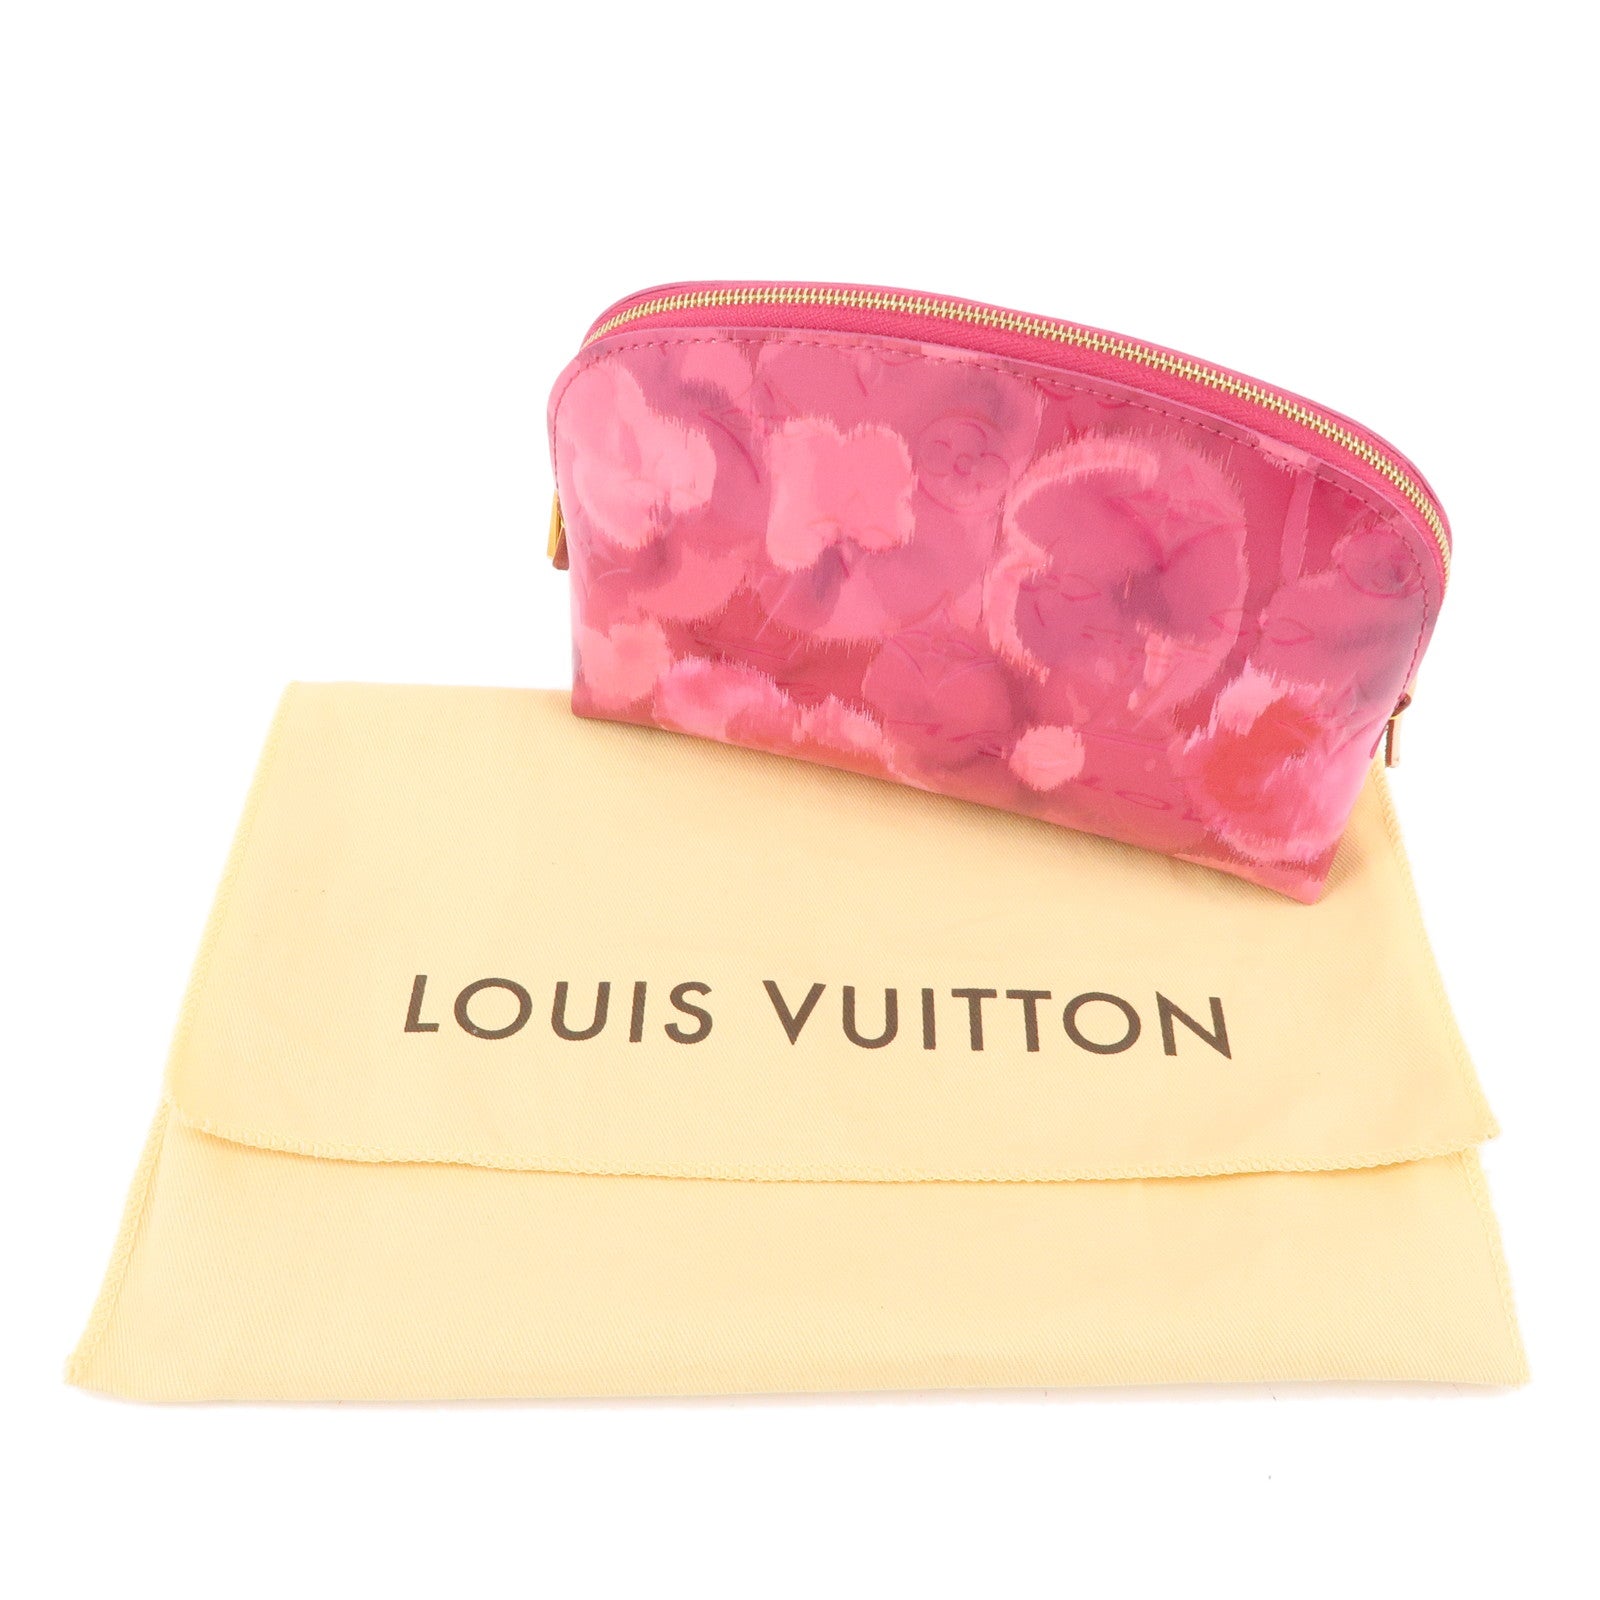 Louis Vuitton Makeup 